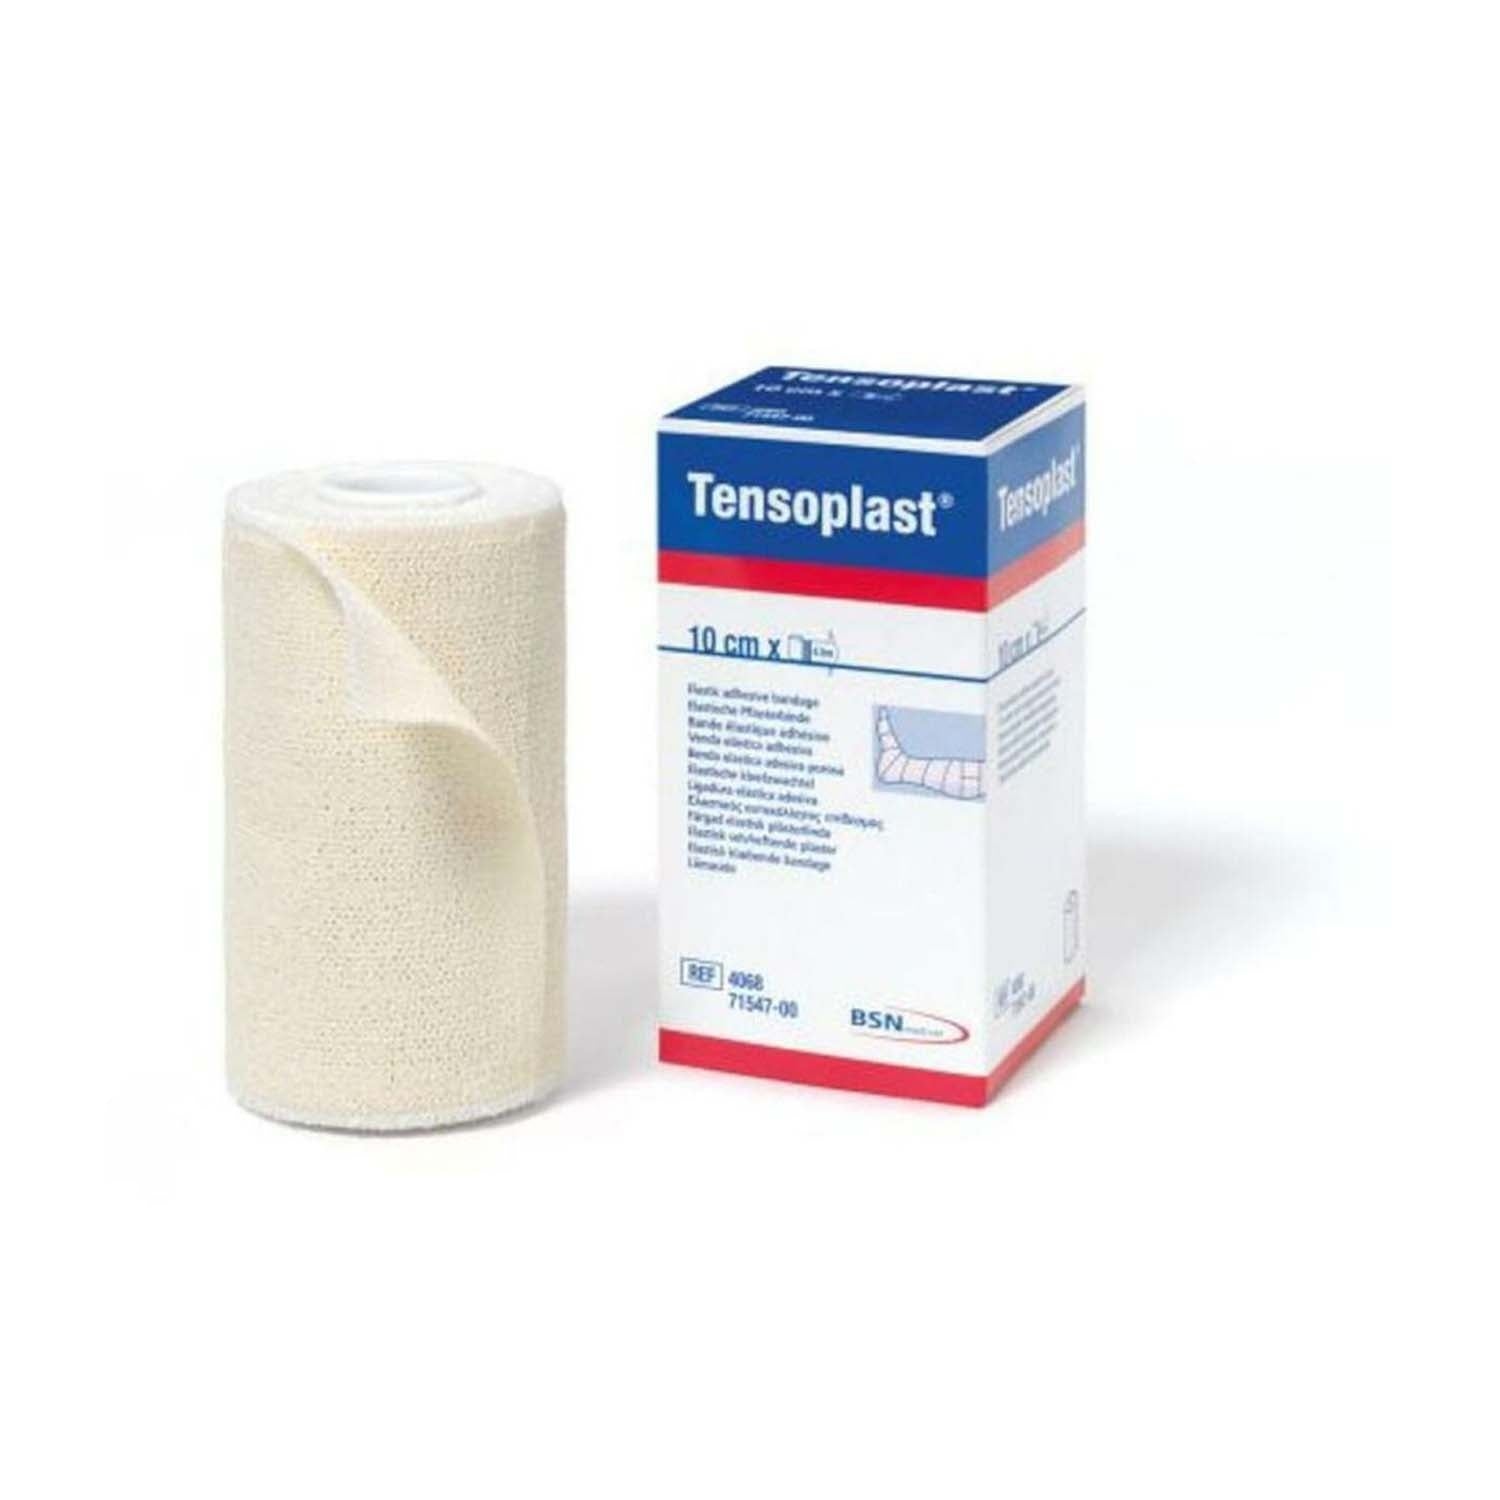 Tensoplast Elastic Adhesive Bandage | 2.5cm x 4.5m | Plaster | Pack of 12